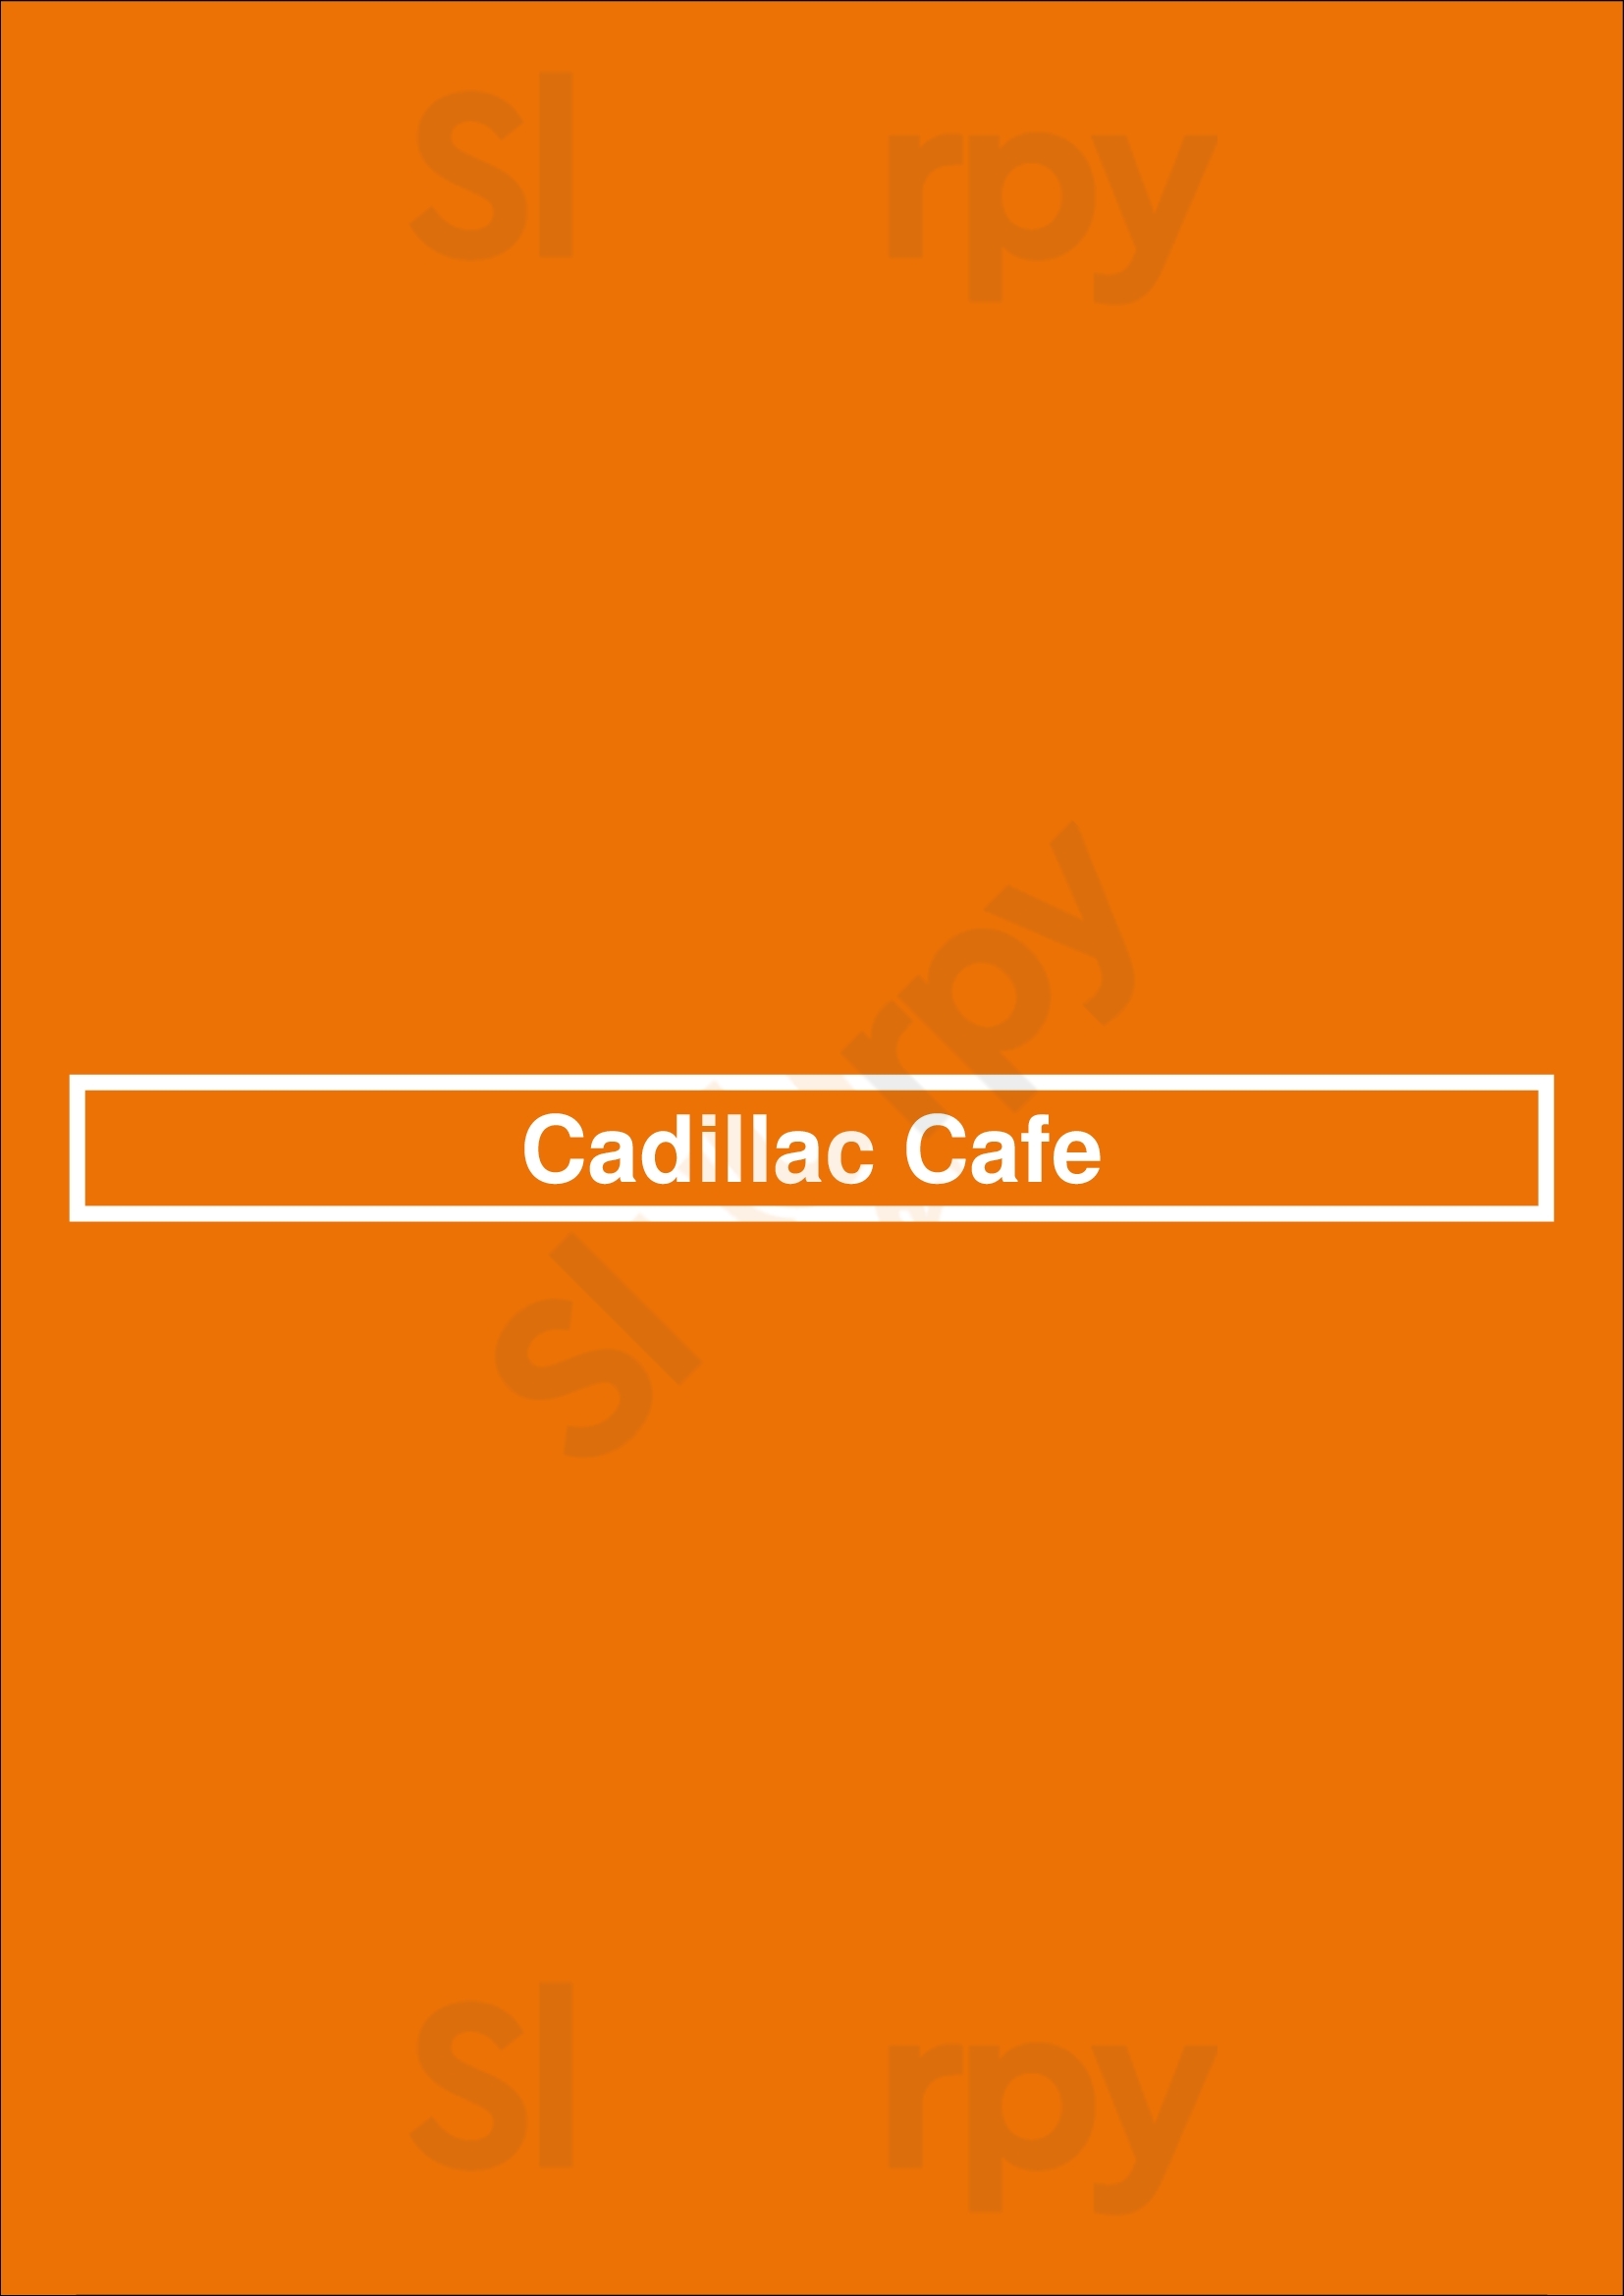 Cadillac Cafe Portland Menu - 1